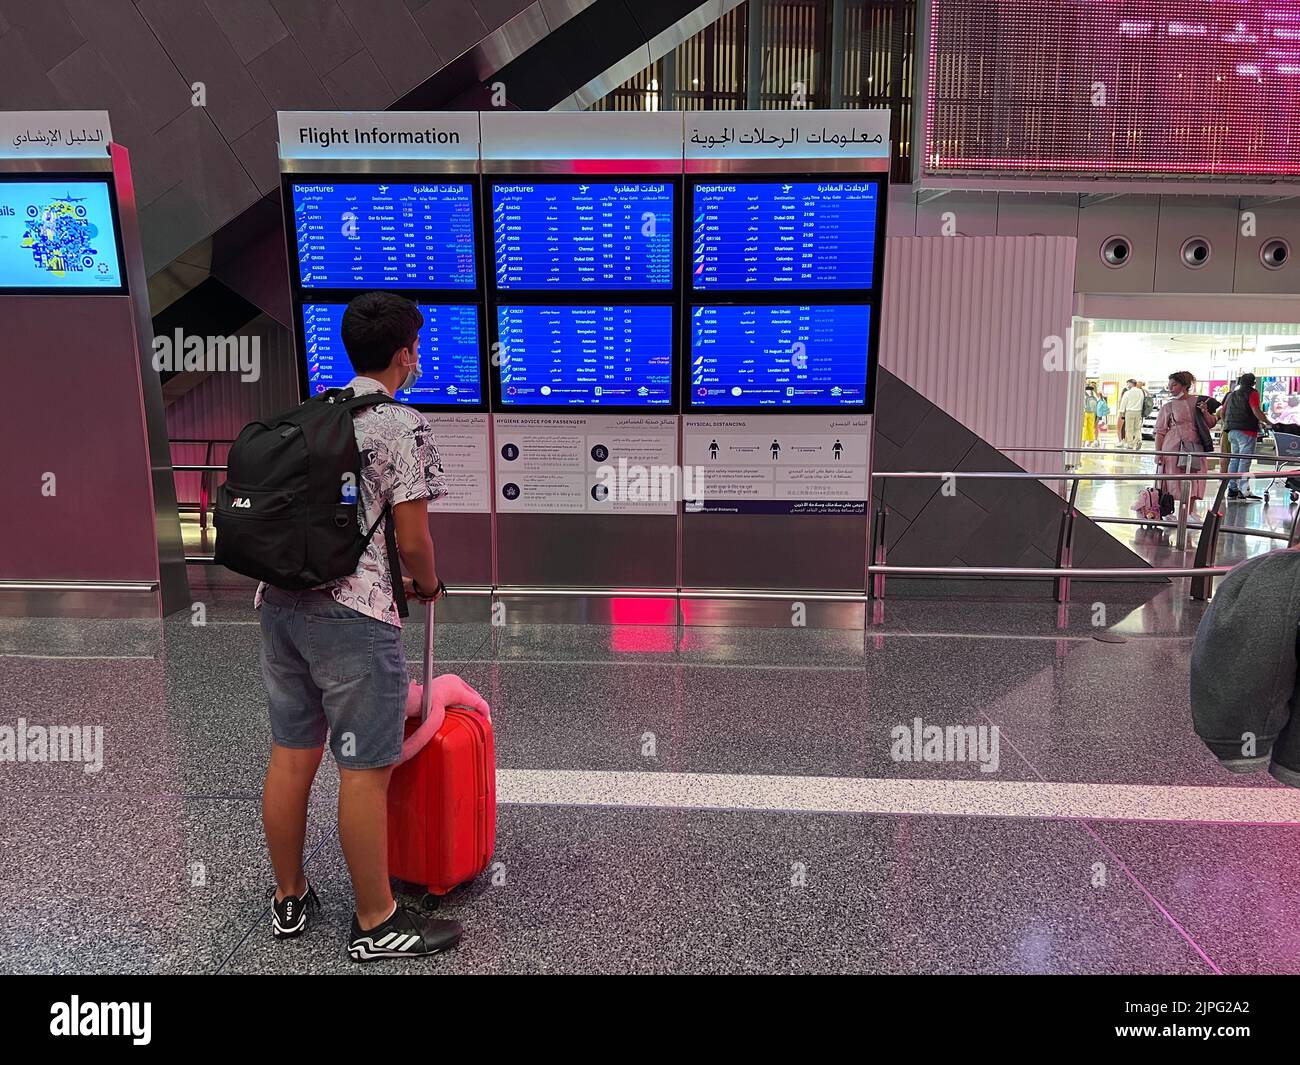 Hamad International Airport Doha Qatar. Flight Information Board Stock Photo